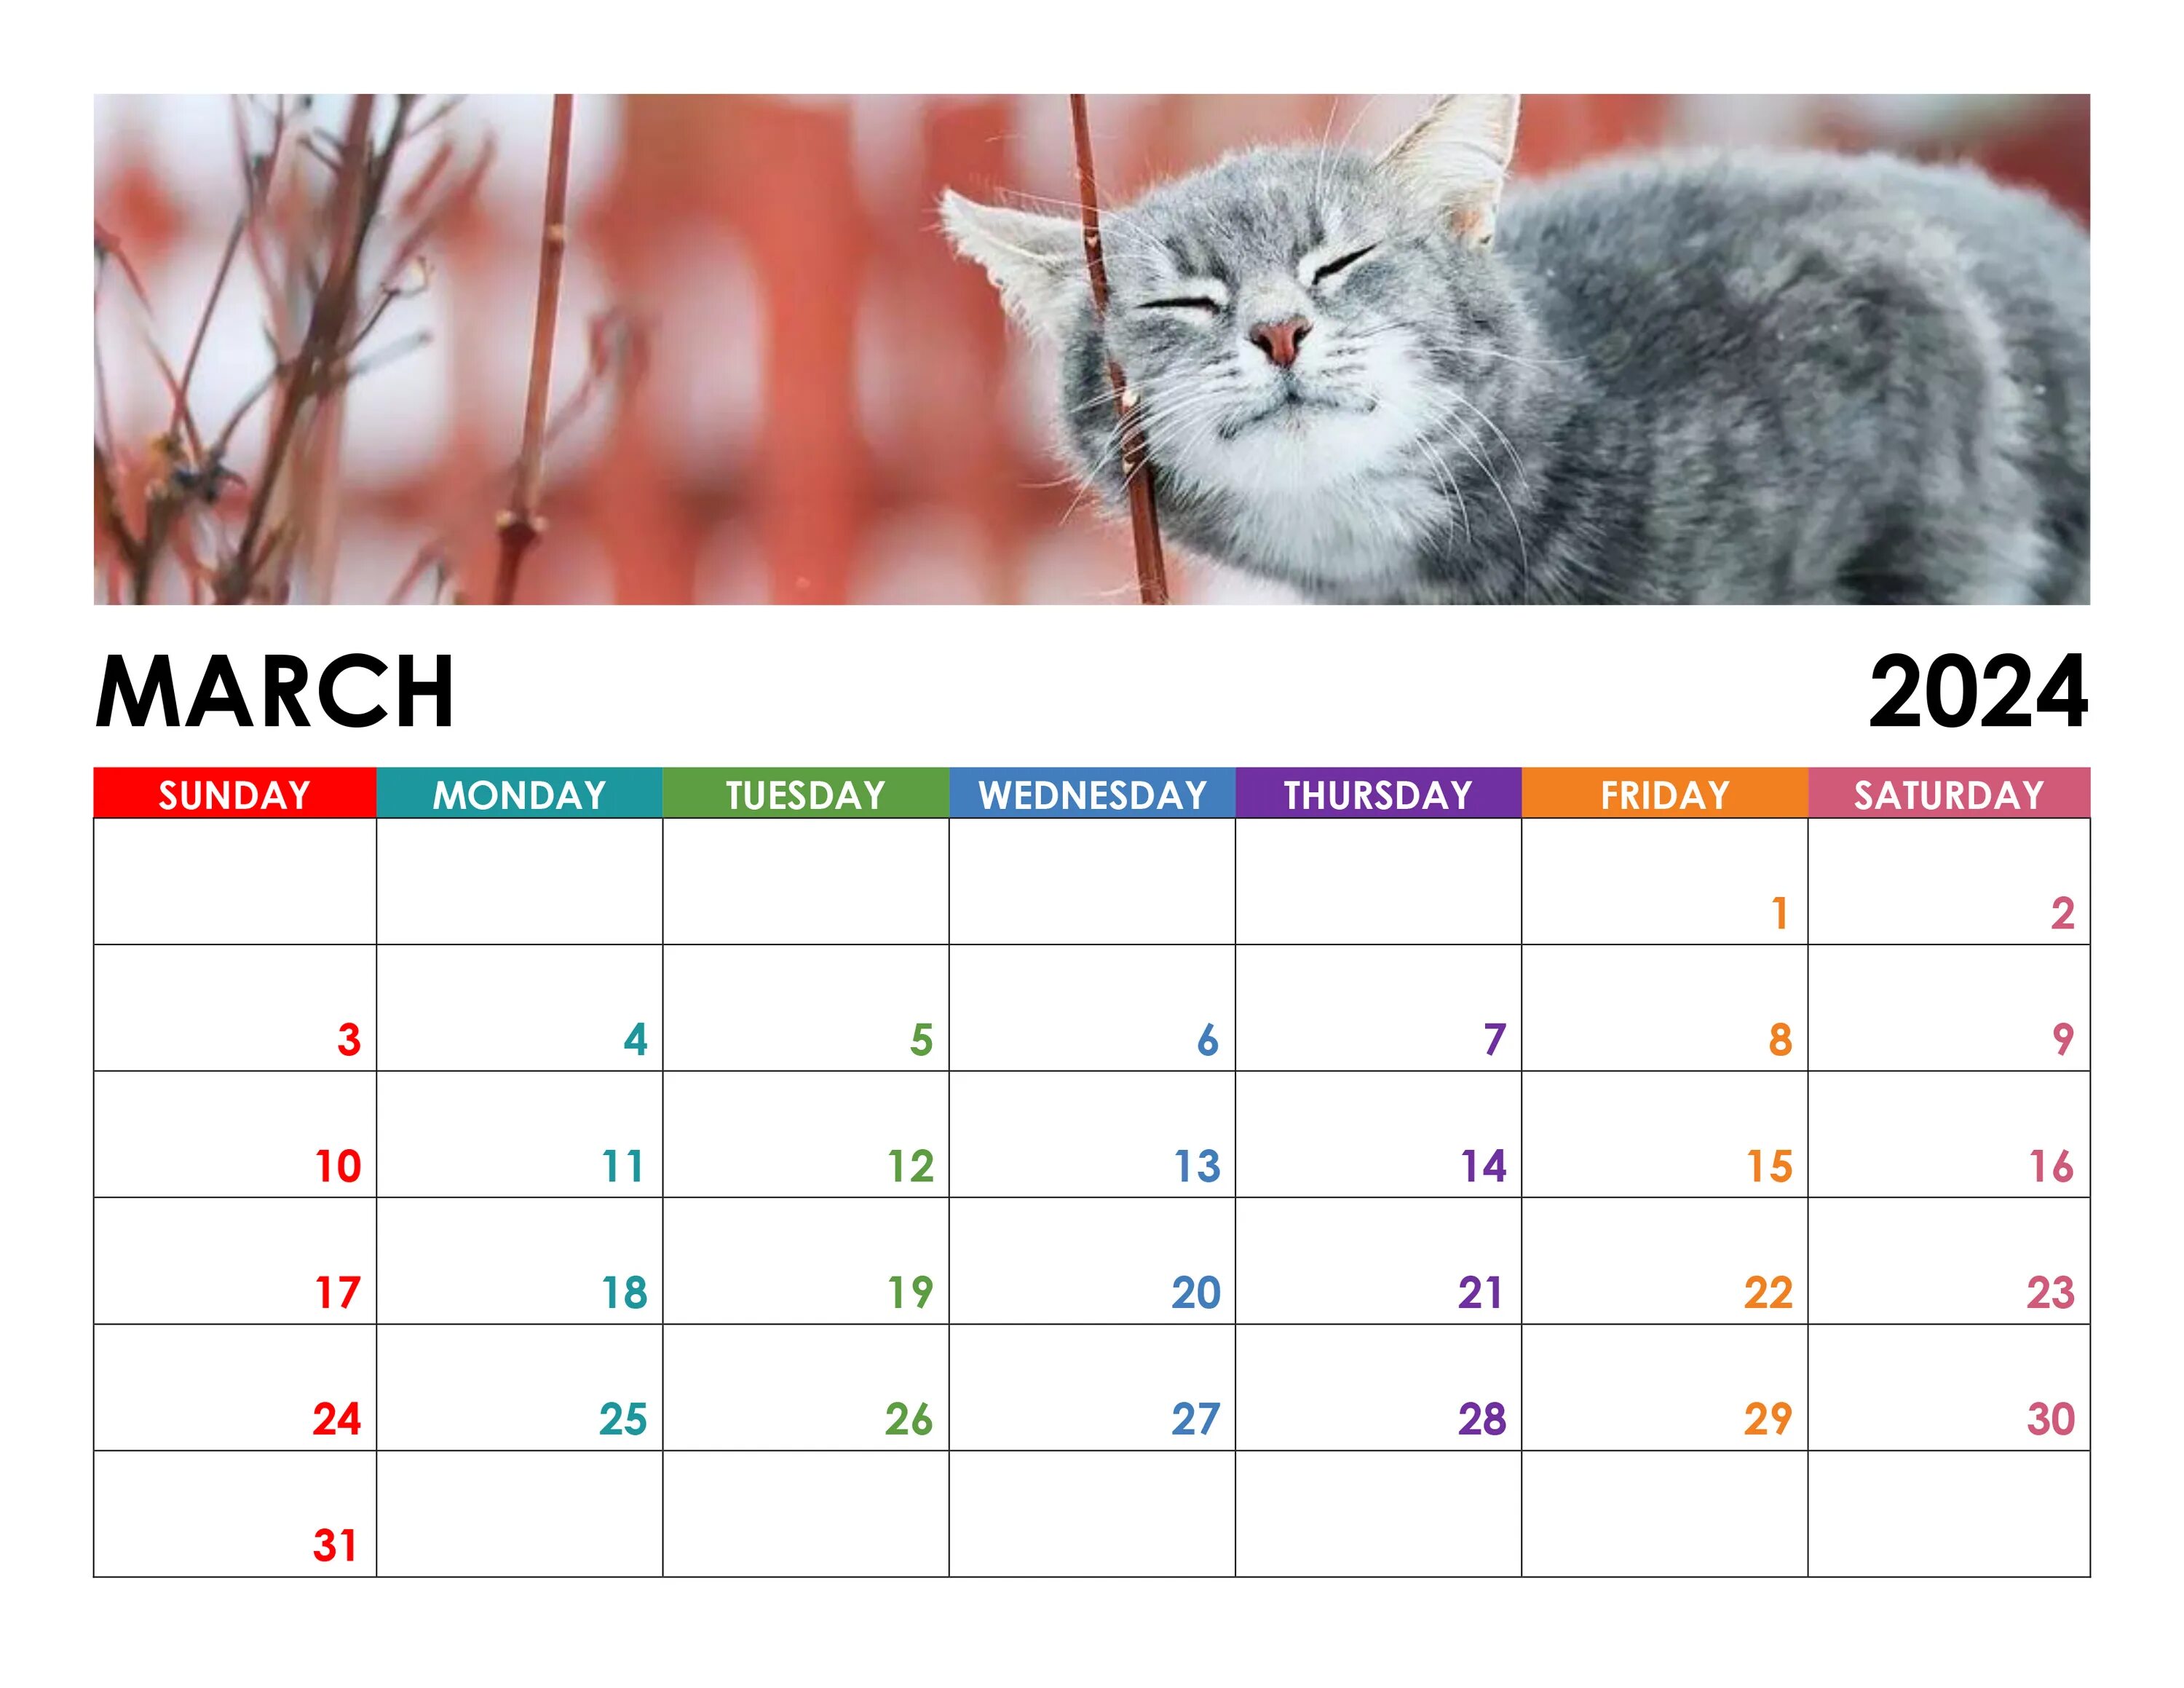 Мать 2023. Март 2023. Календарь март 2023. Март 2024. Включи календарь на март